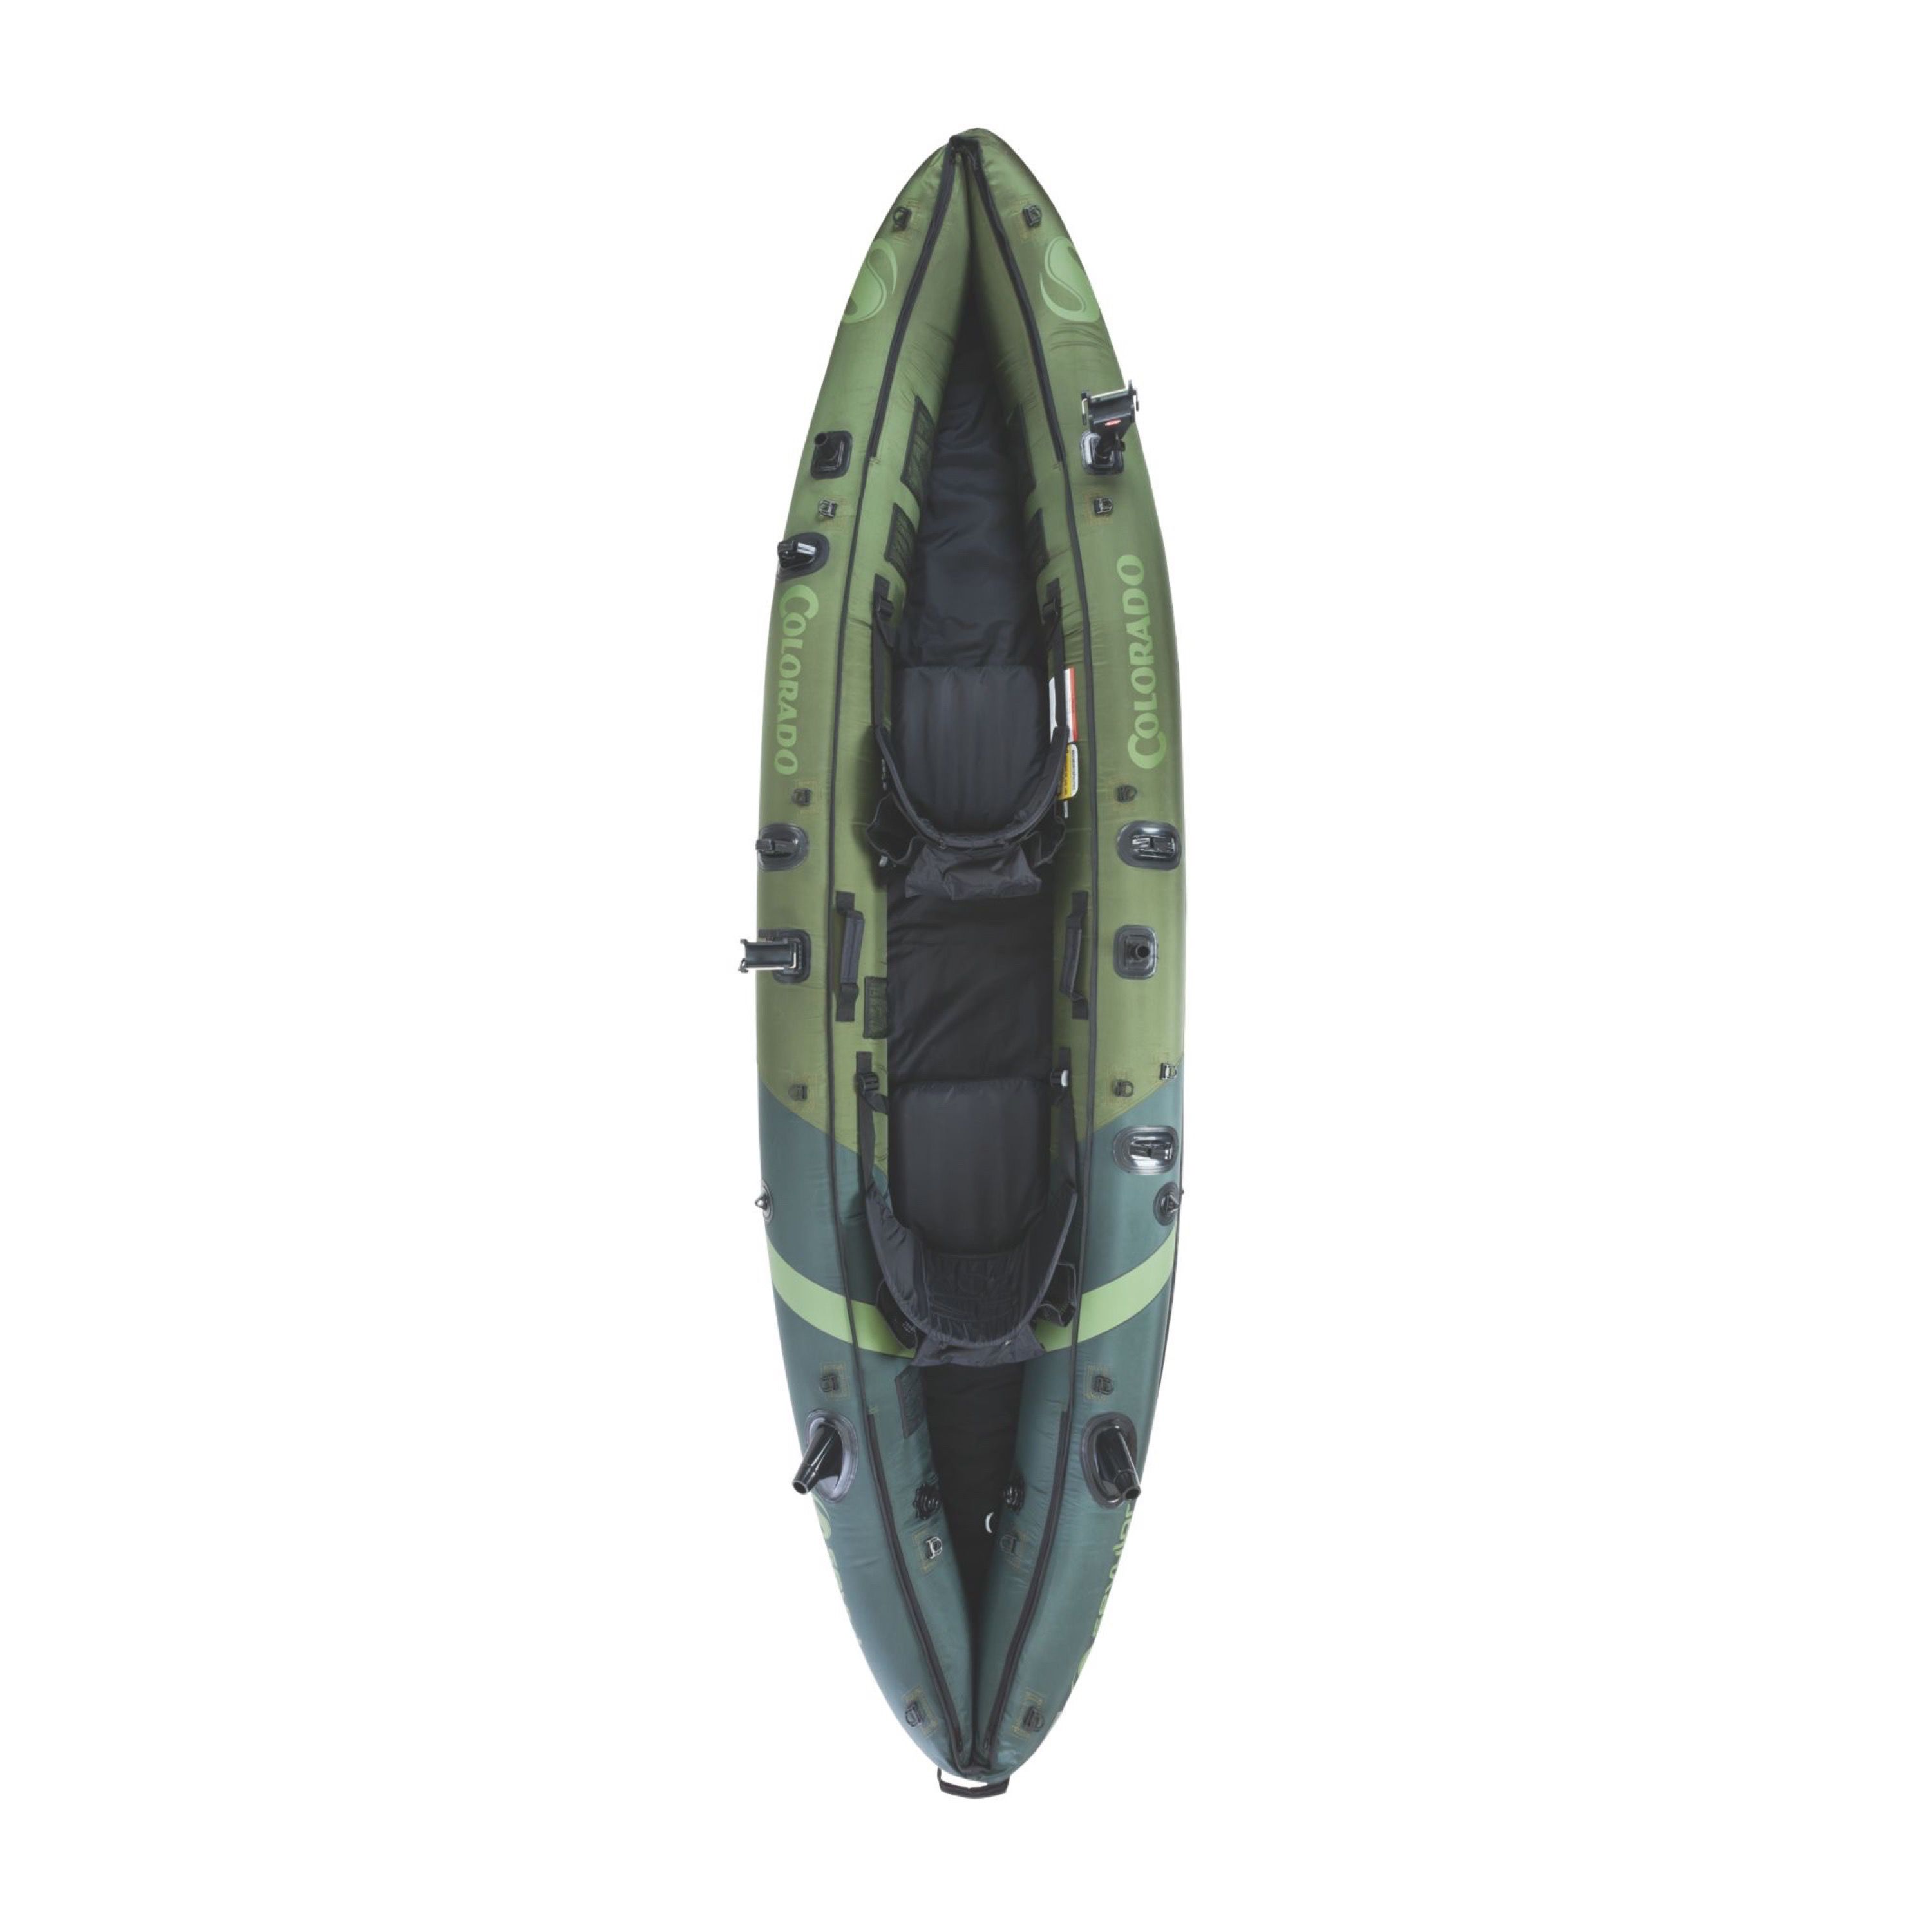 Sevylor Colorado Fish/Hunt 2-Person Inflatable Kayak - image 2 of 8